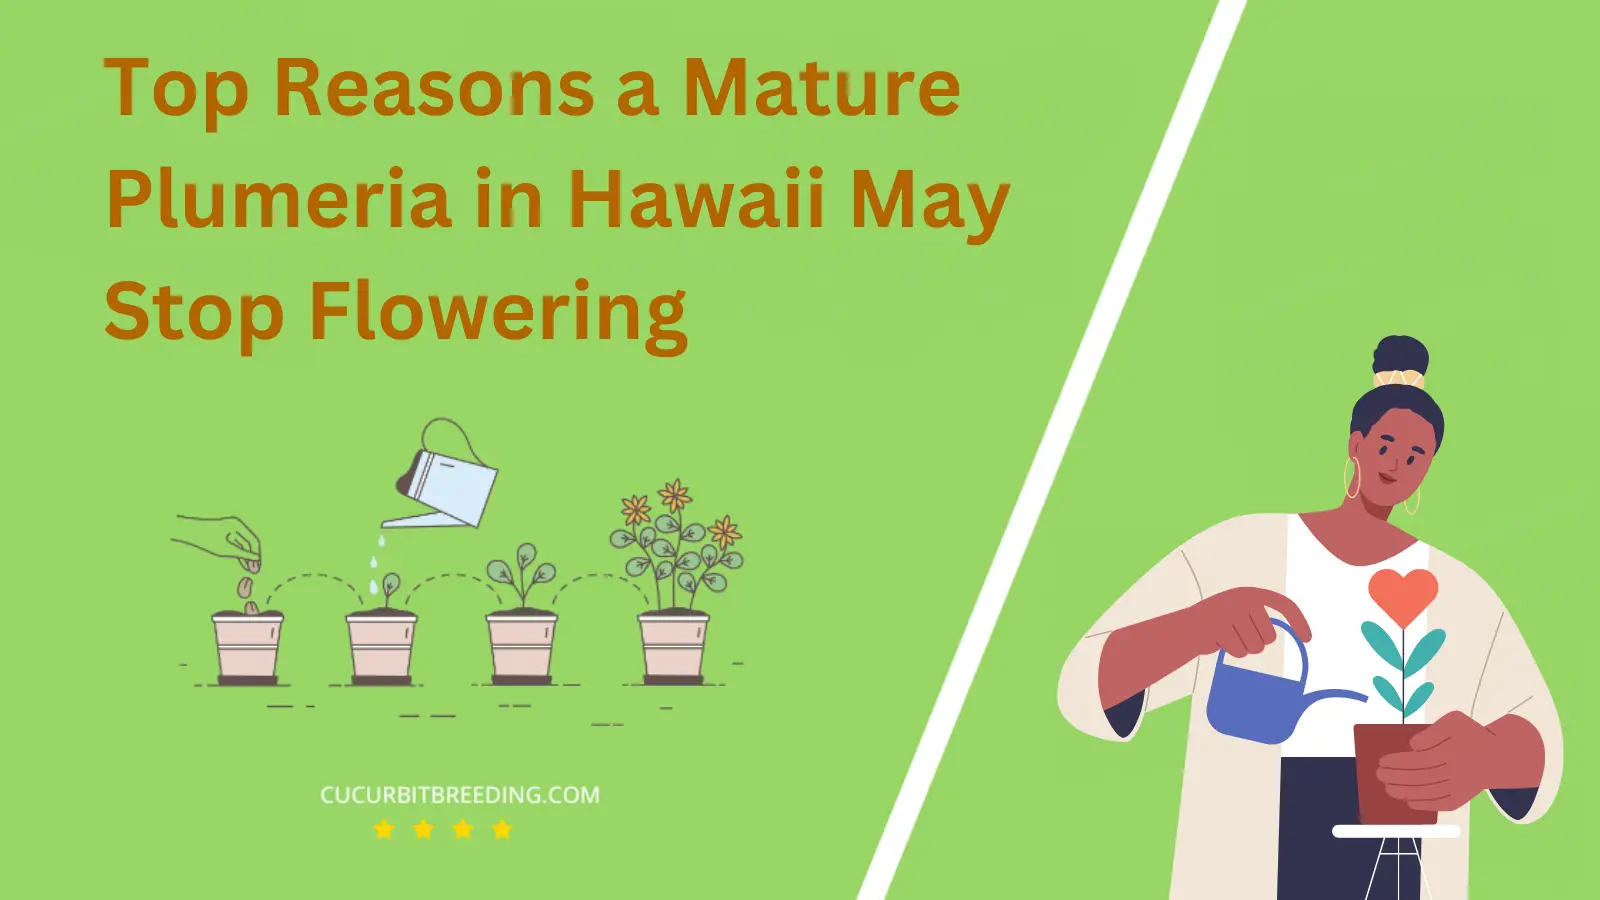 Top Reasons a Mature Plumeria in Hawaii May Stop Flowering